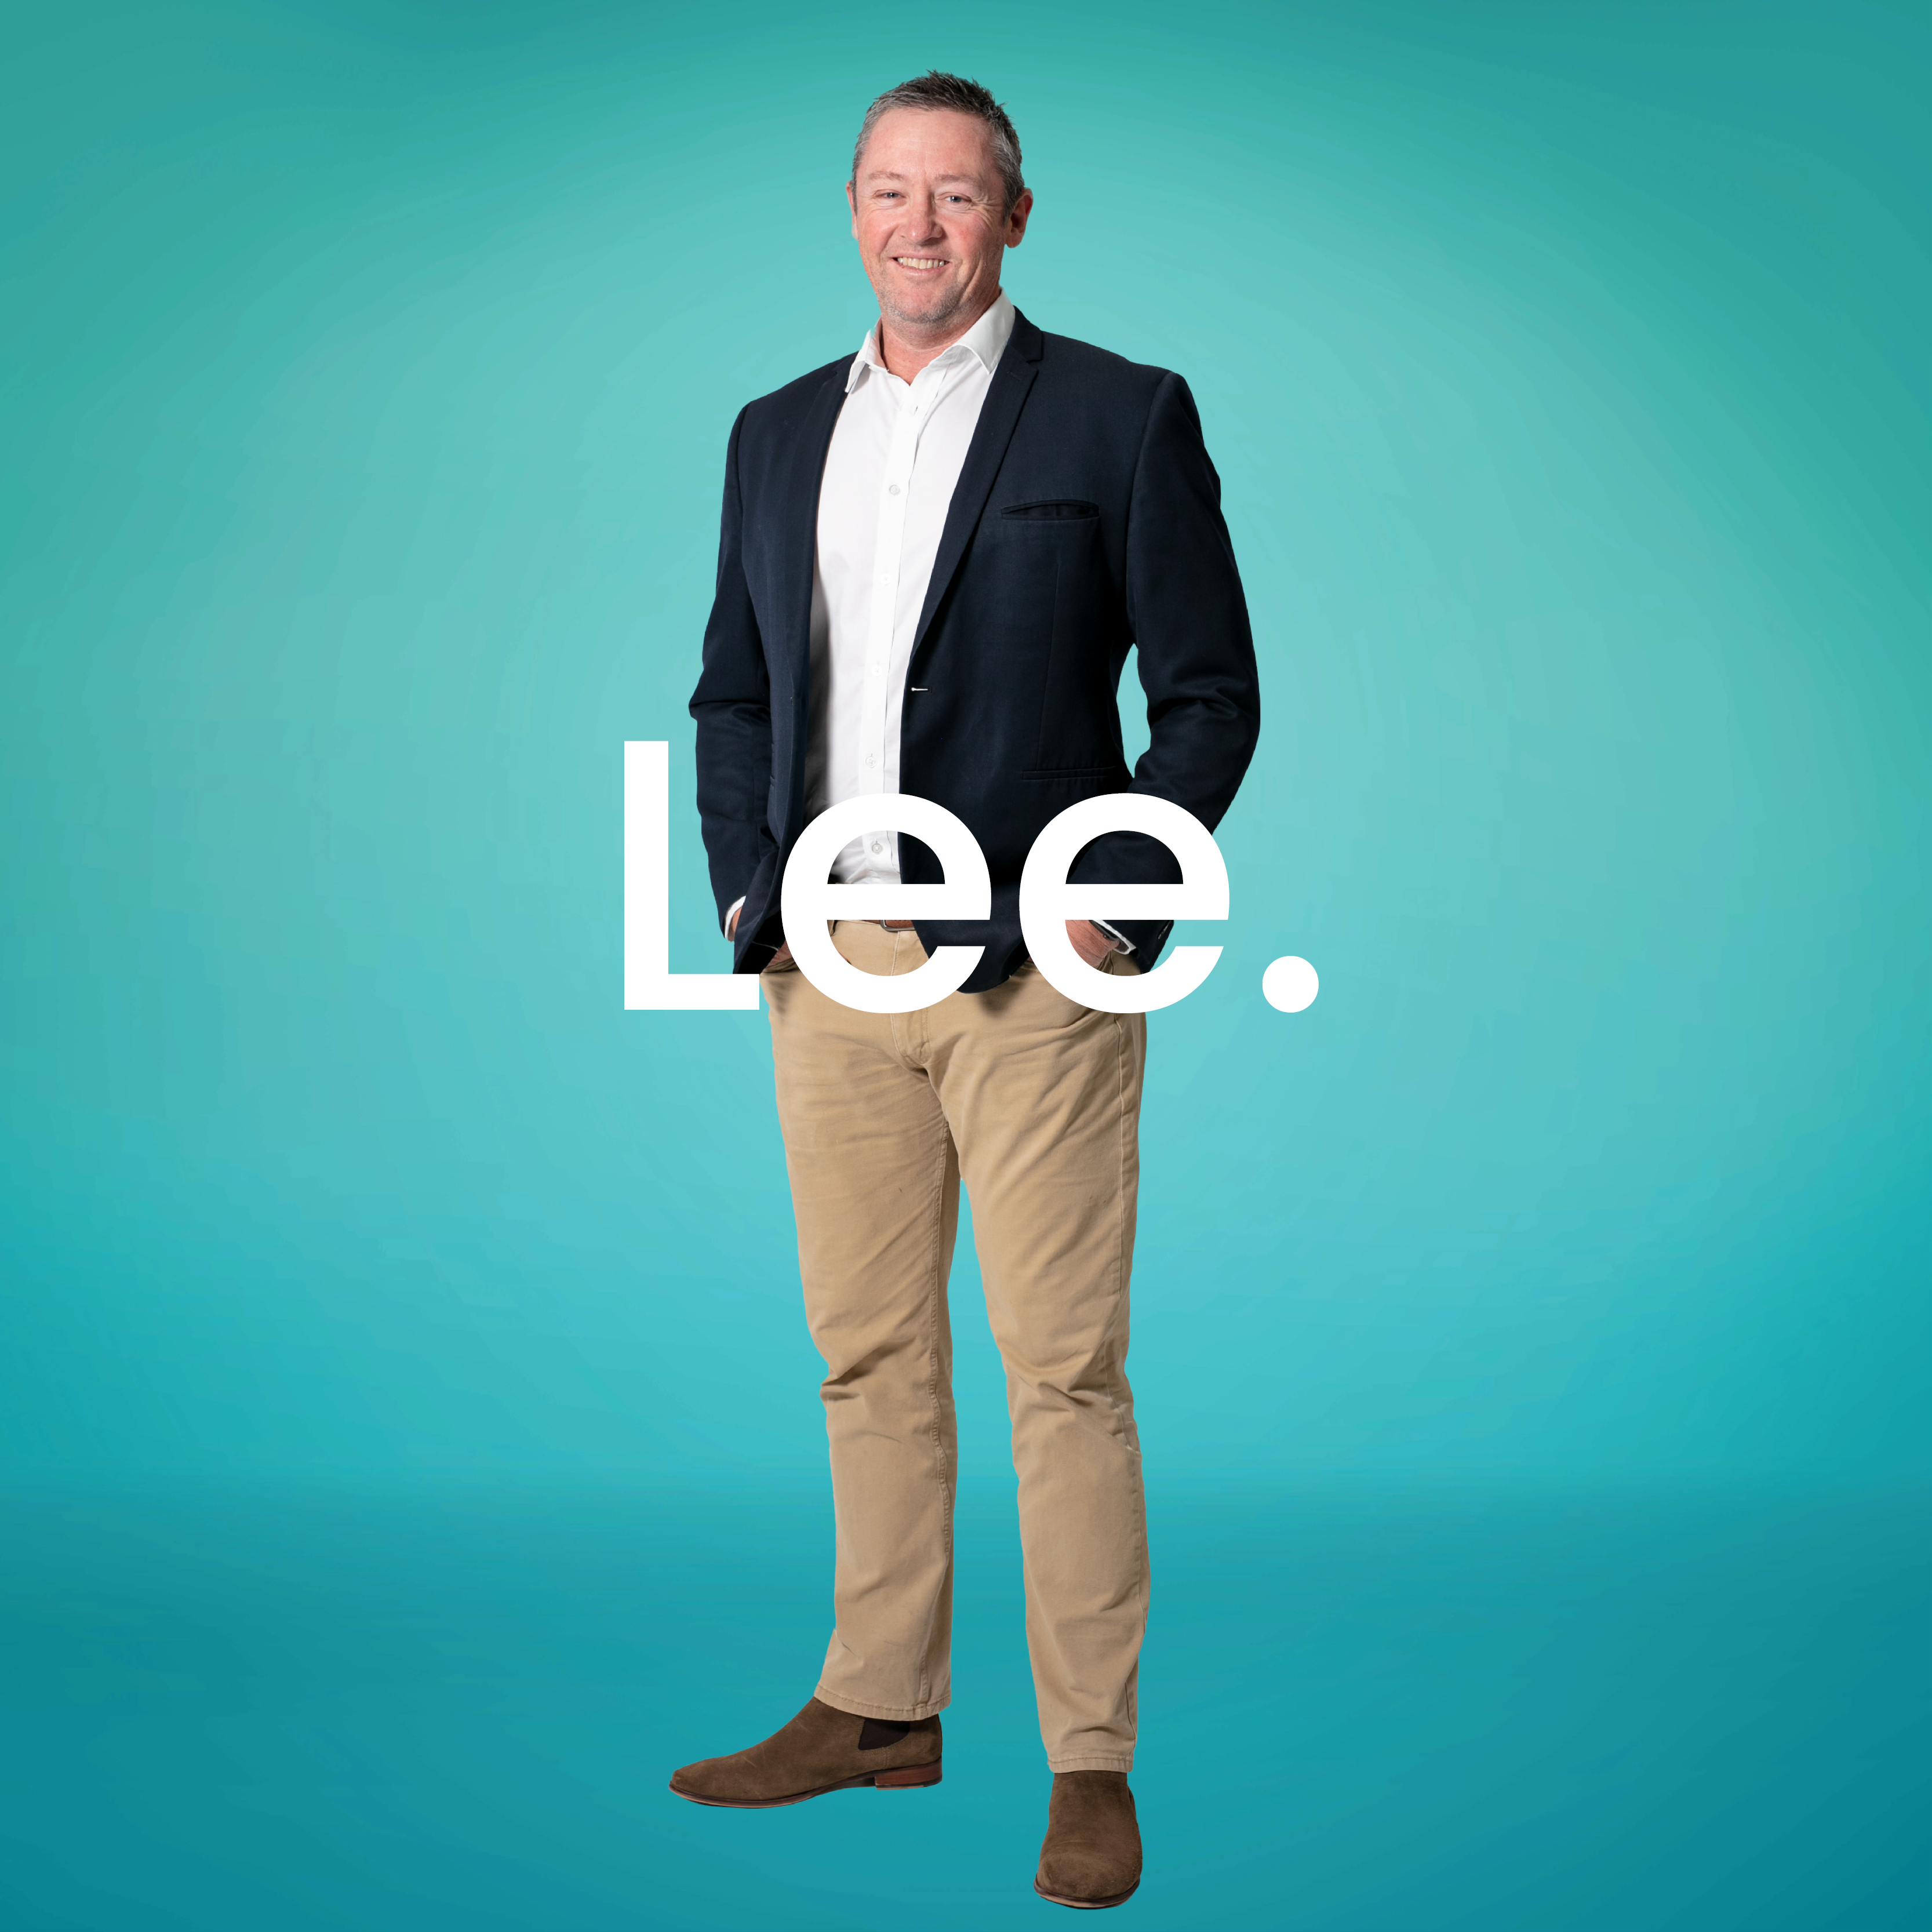 Lee Waterhouse Real Estate Agent